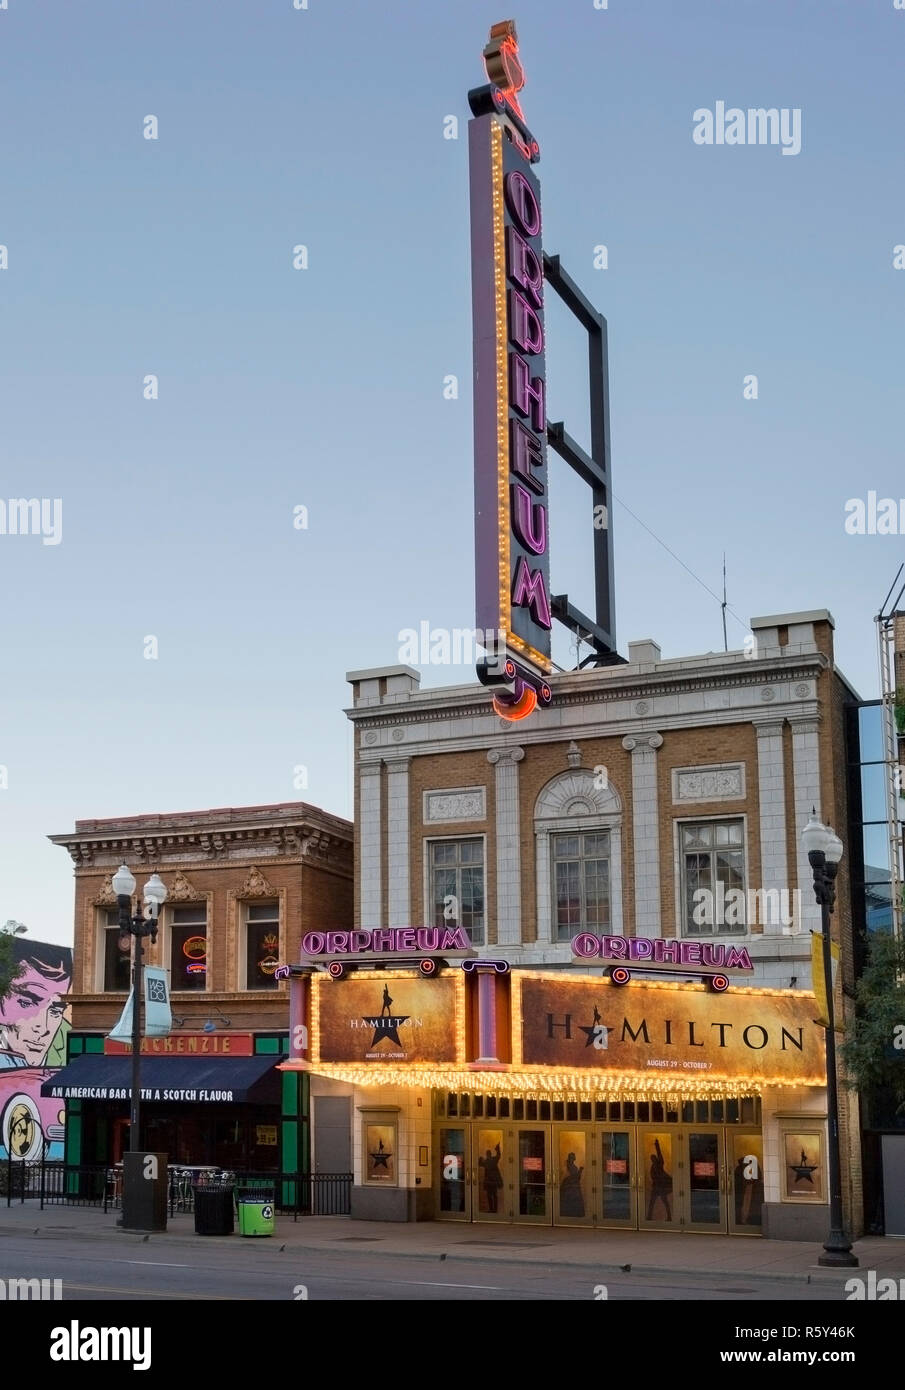 Das Orpheum Theater Festzelt Werbung das Broadway Musical Hamilton in Minneapolis, Minnesota Stockfoto